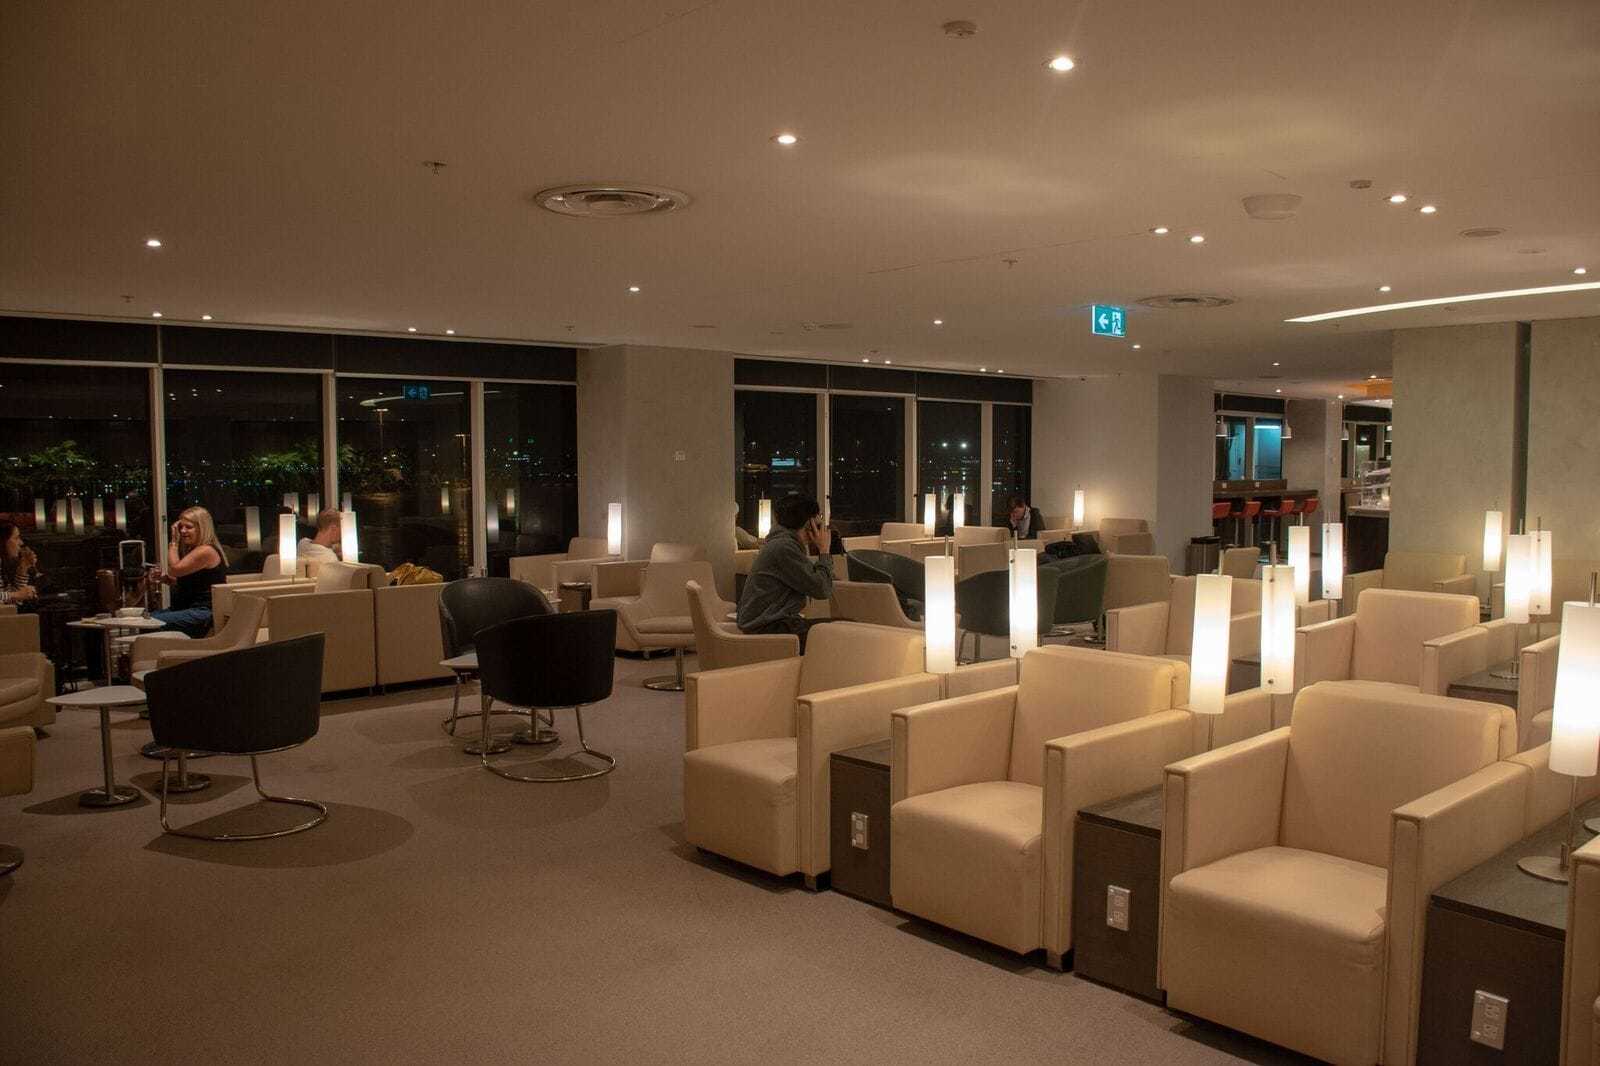 SkyTeam Sydney Lounge